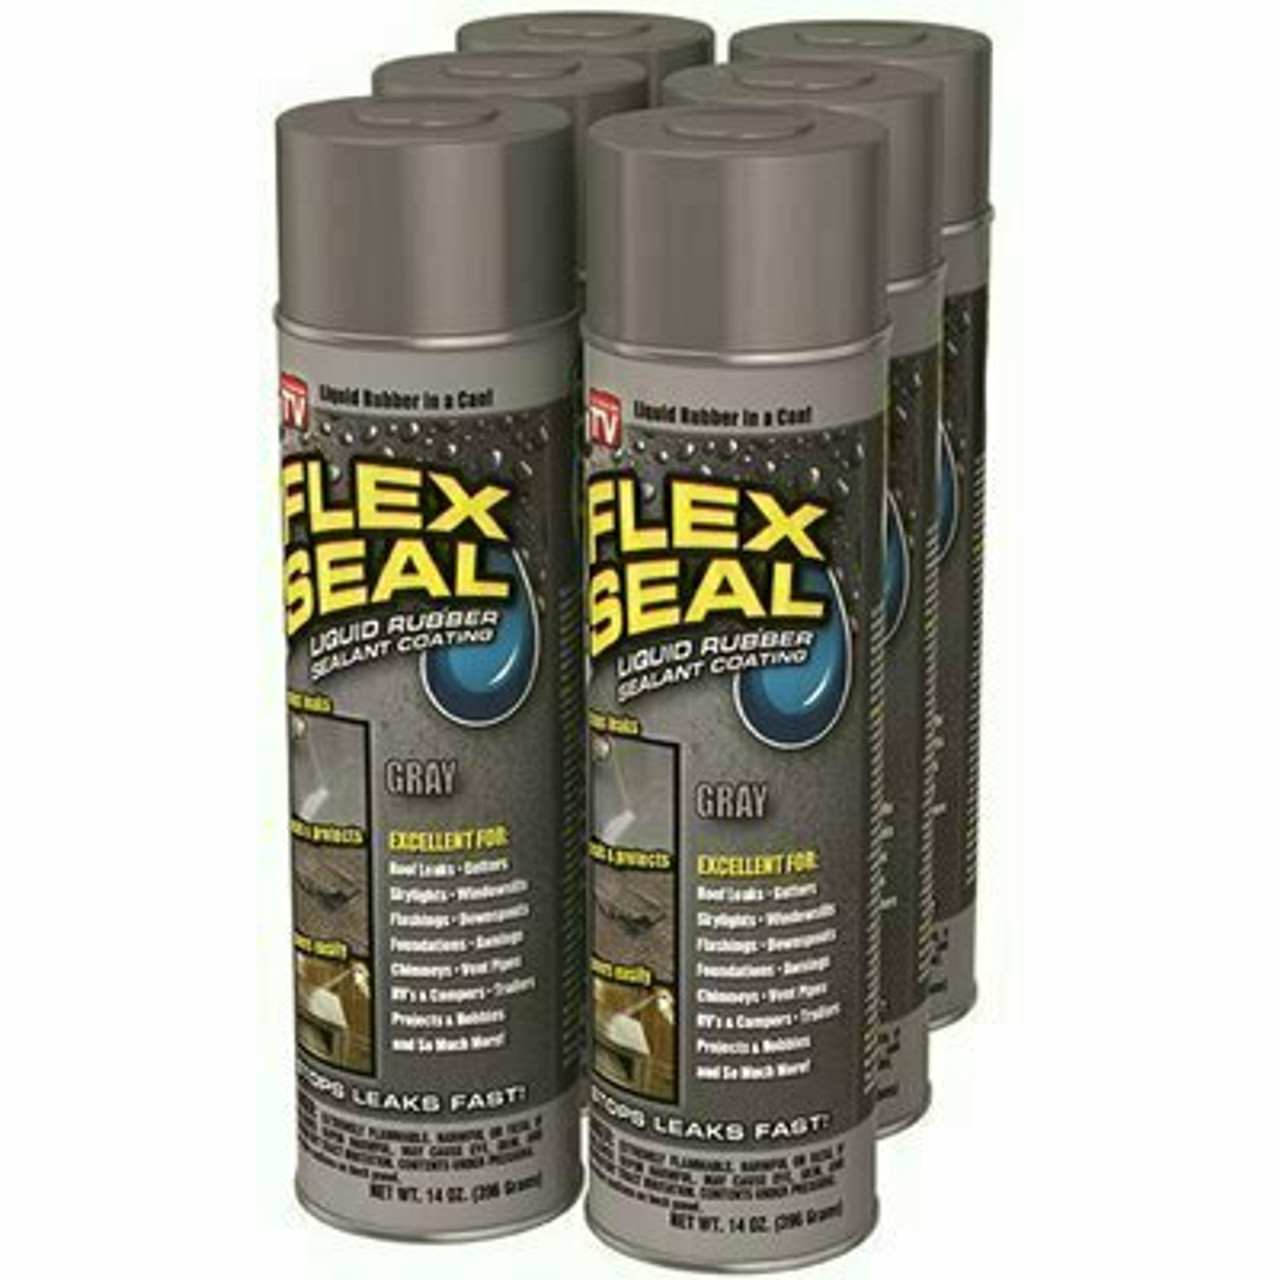 Flex Seal Family Of Products Flex Seal Gray 14 Oz. Aerosol Liquid Rubber Sealant Coating (6-Piece)